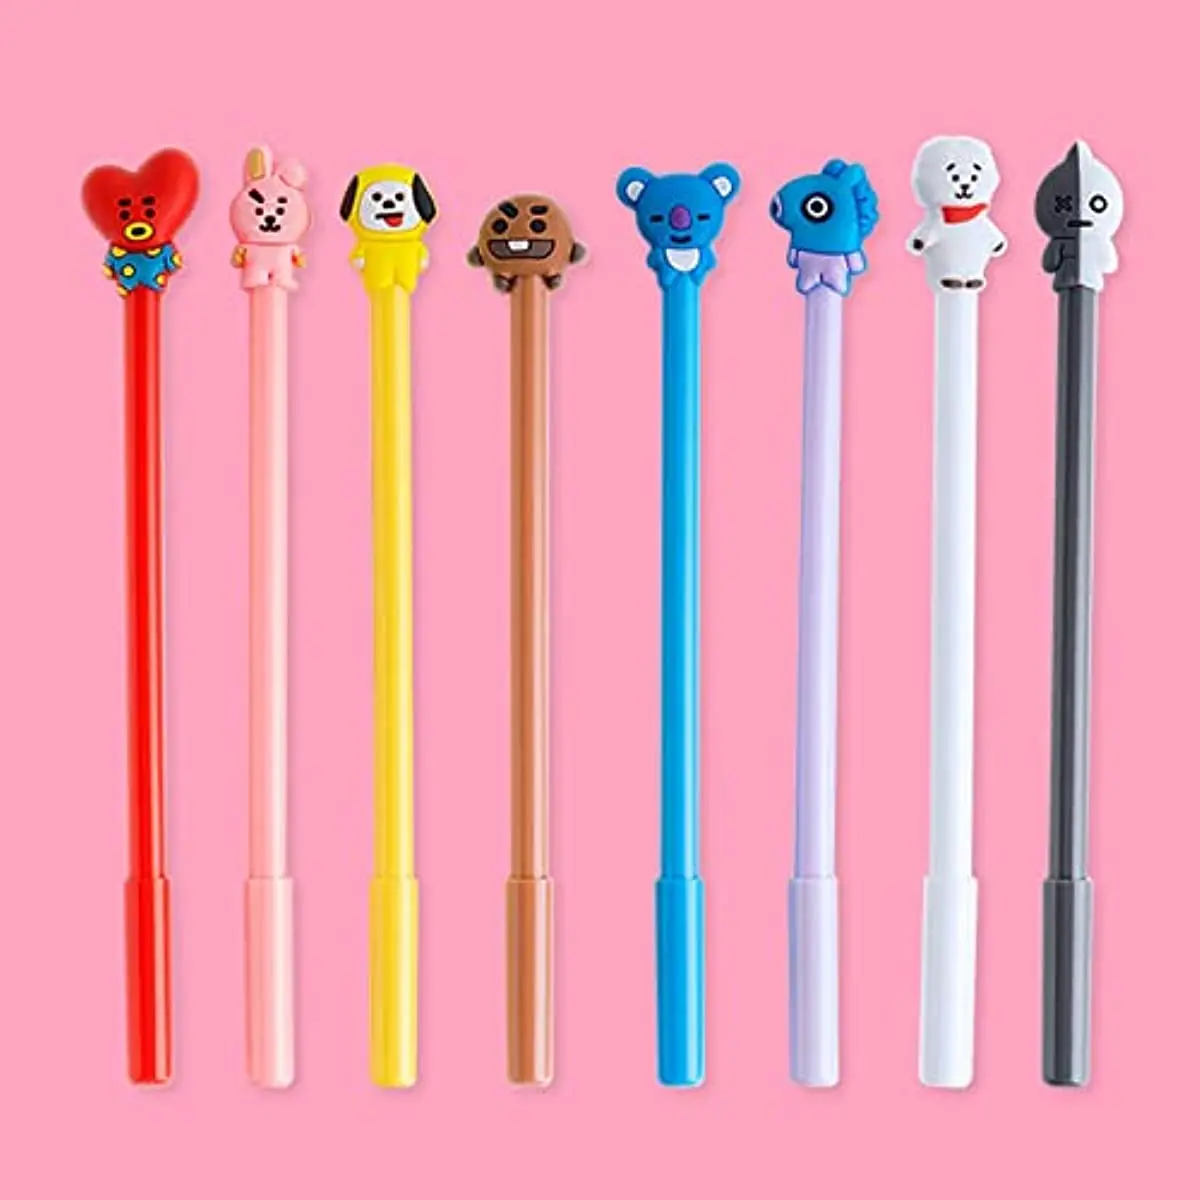 24 Pcs Cartoon Animal Pens, Cute Cartoon Gel Ink Pens Boys Girls Suitable for Writing Tools Kawaii School Supplies Stationery